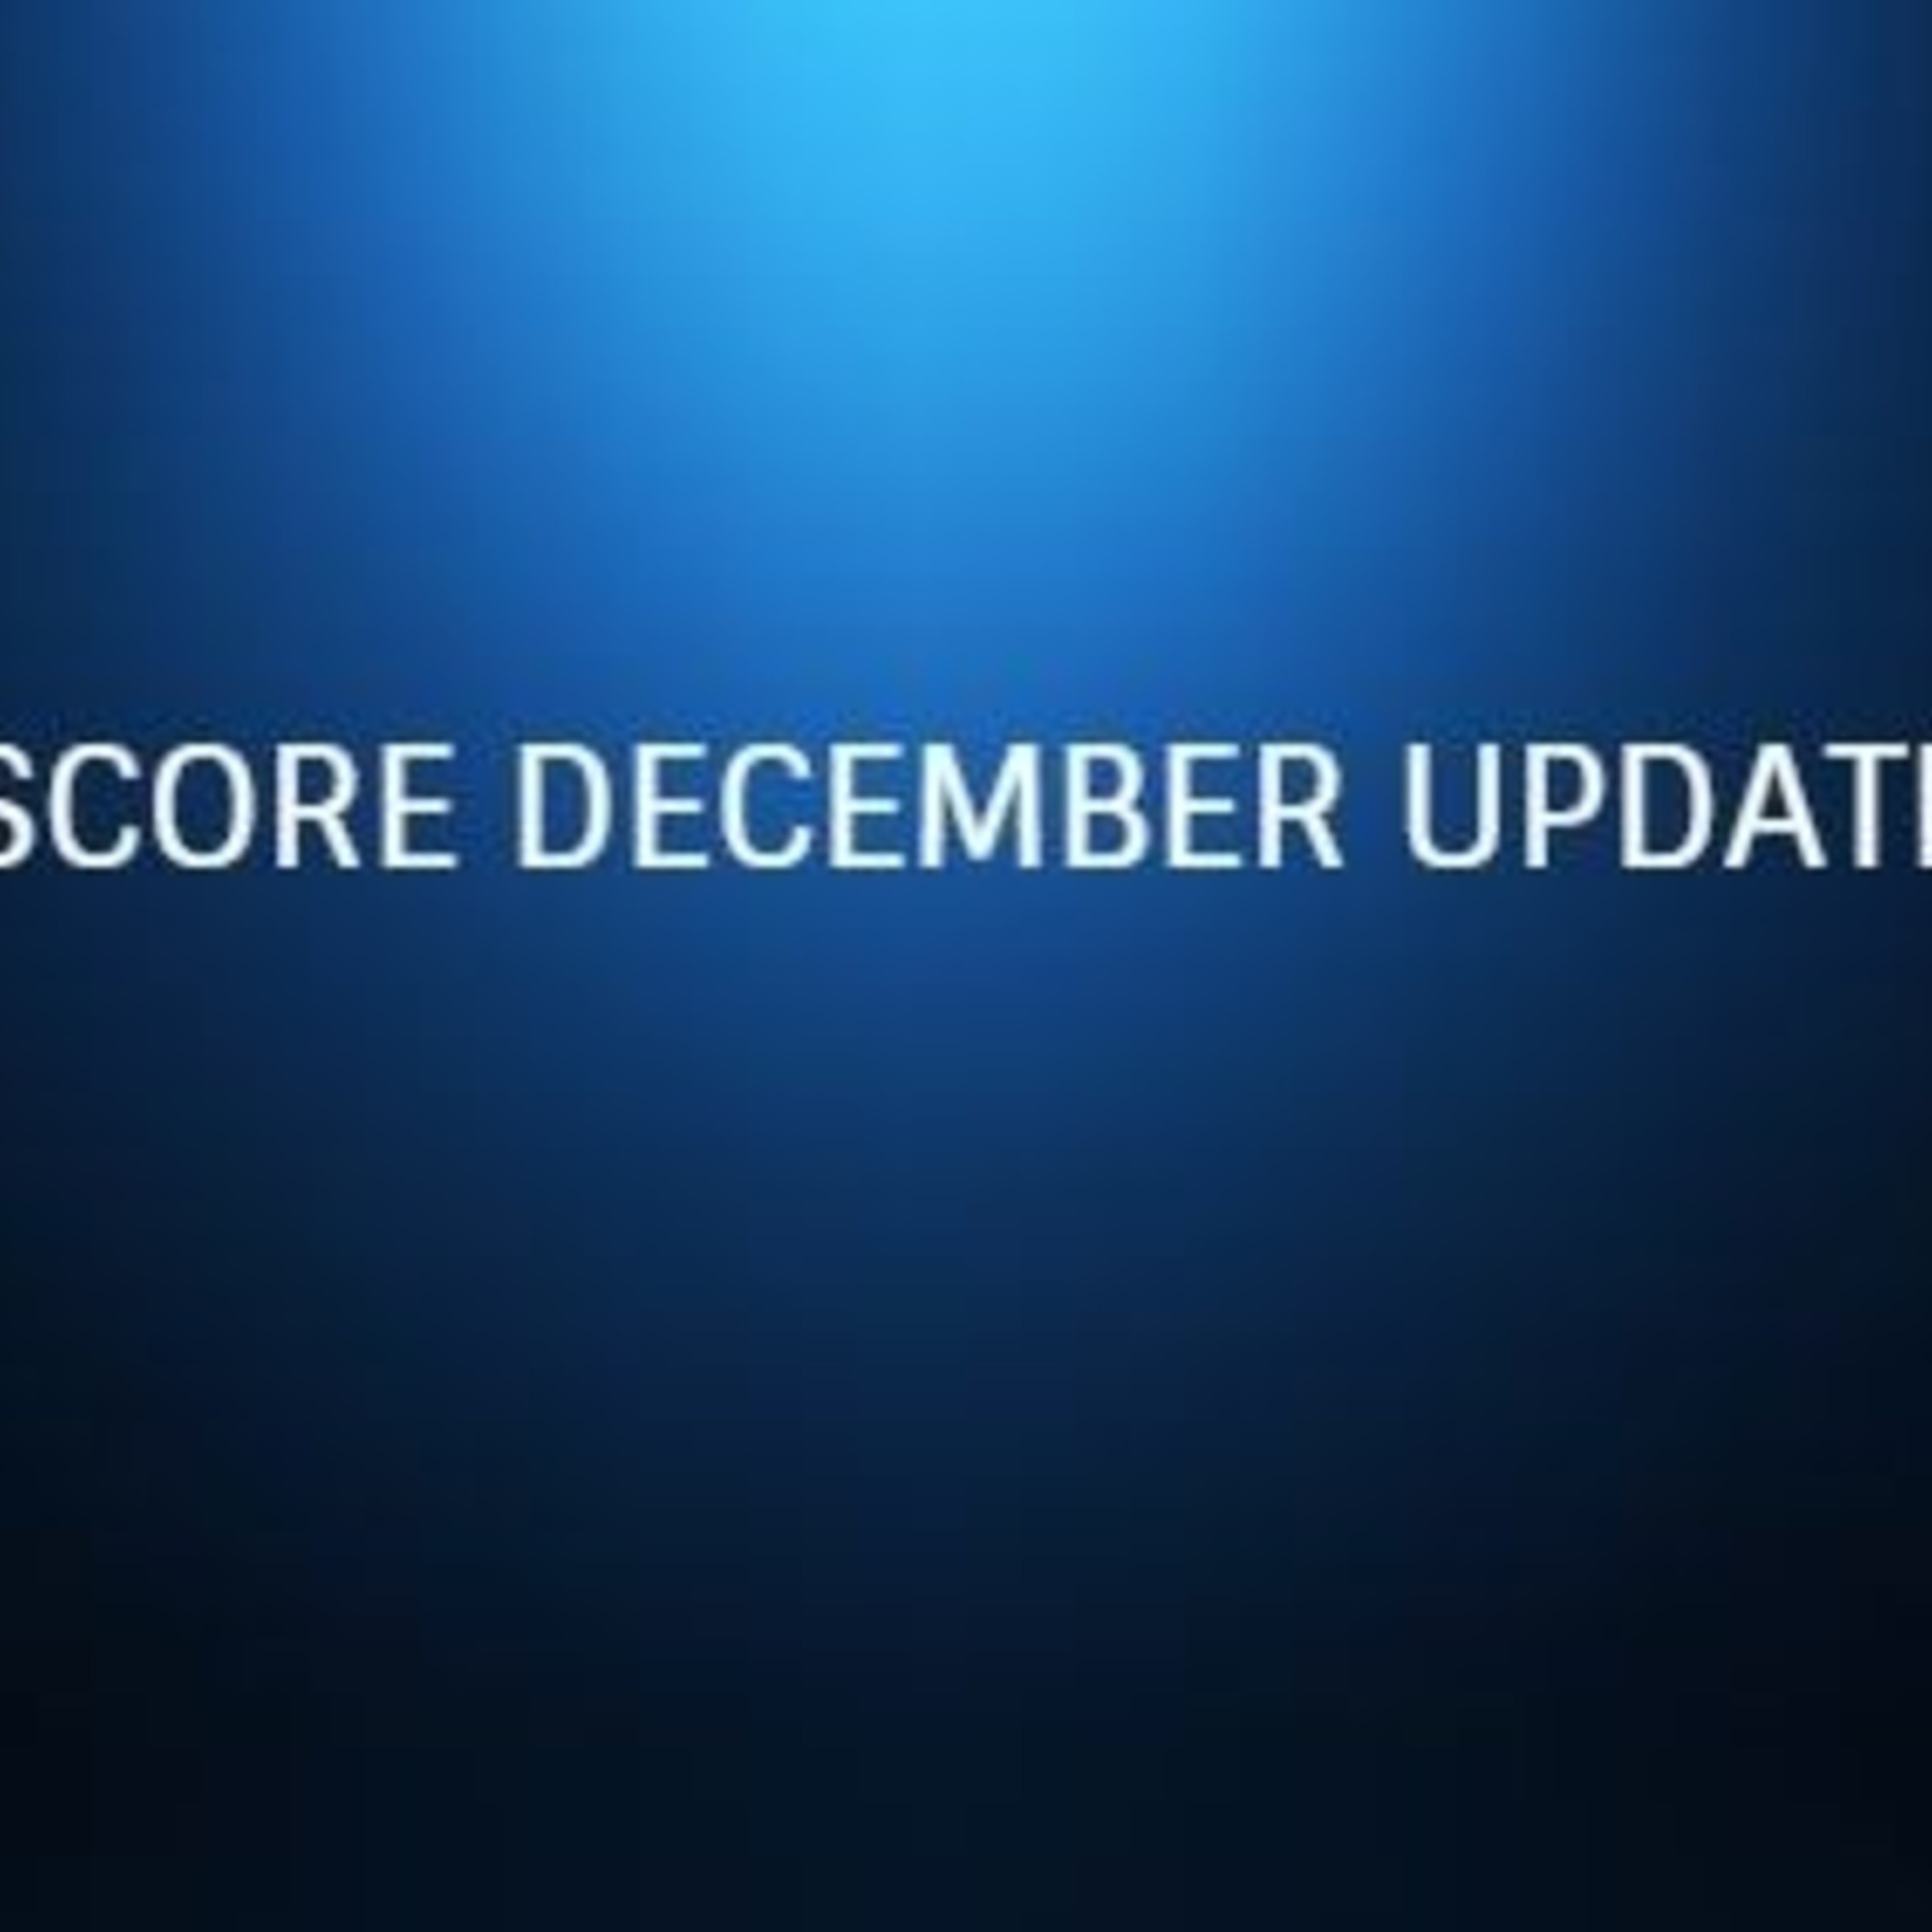 Score December Update